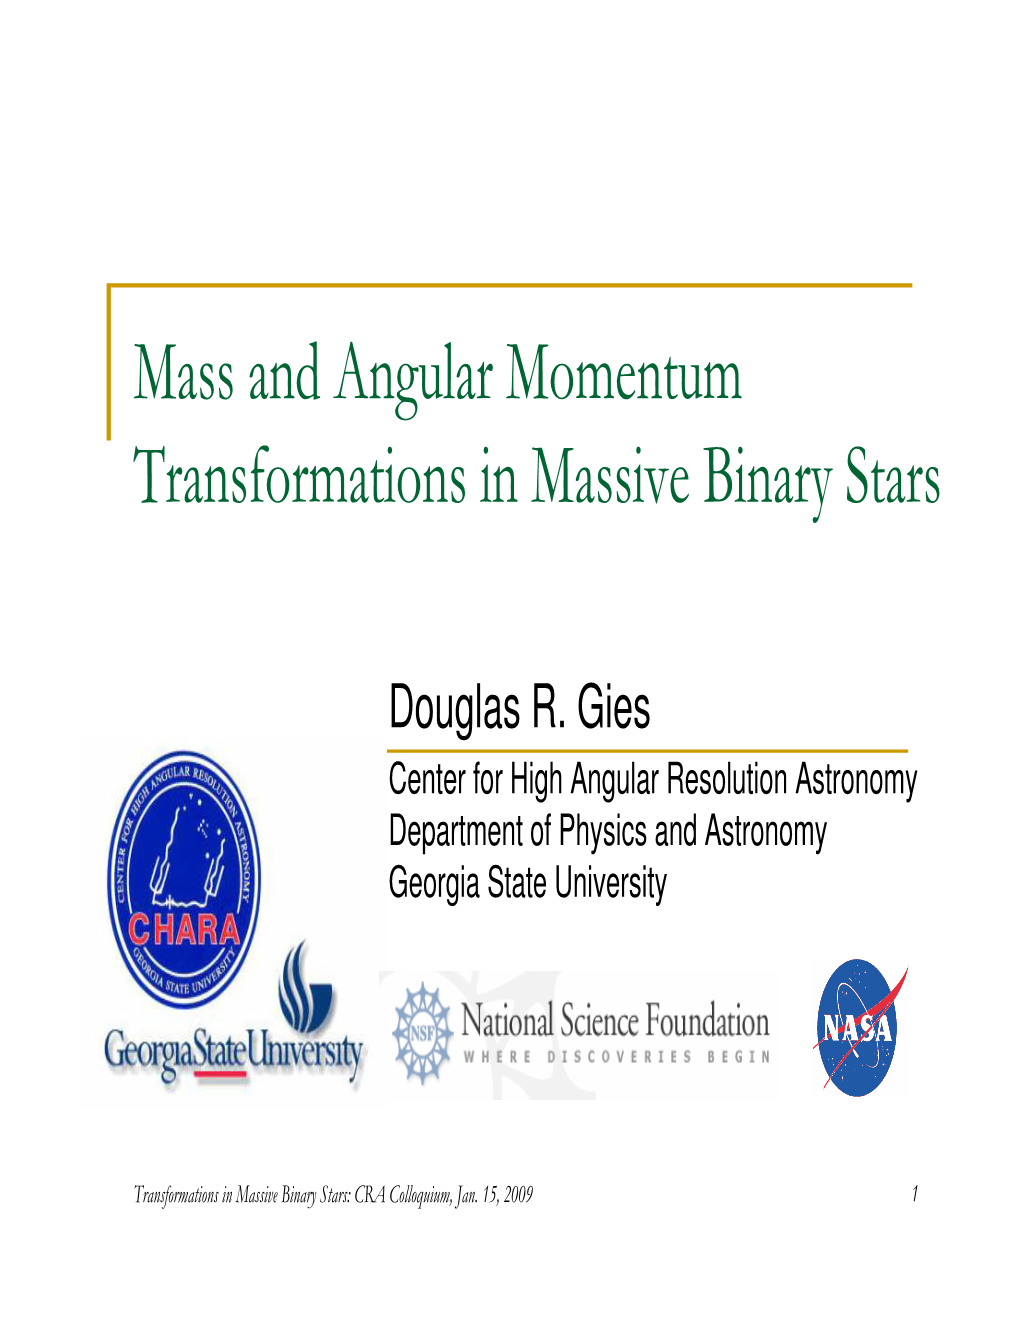 A PDF Presentation on "Mass and Angular Momentum